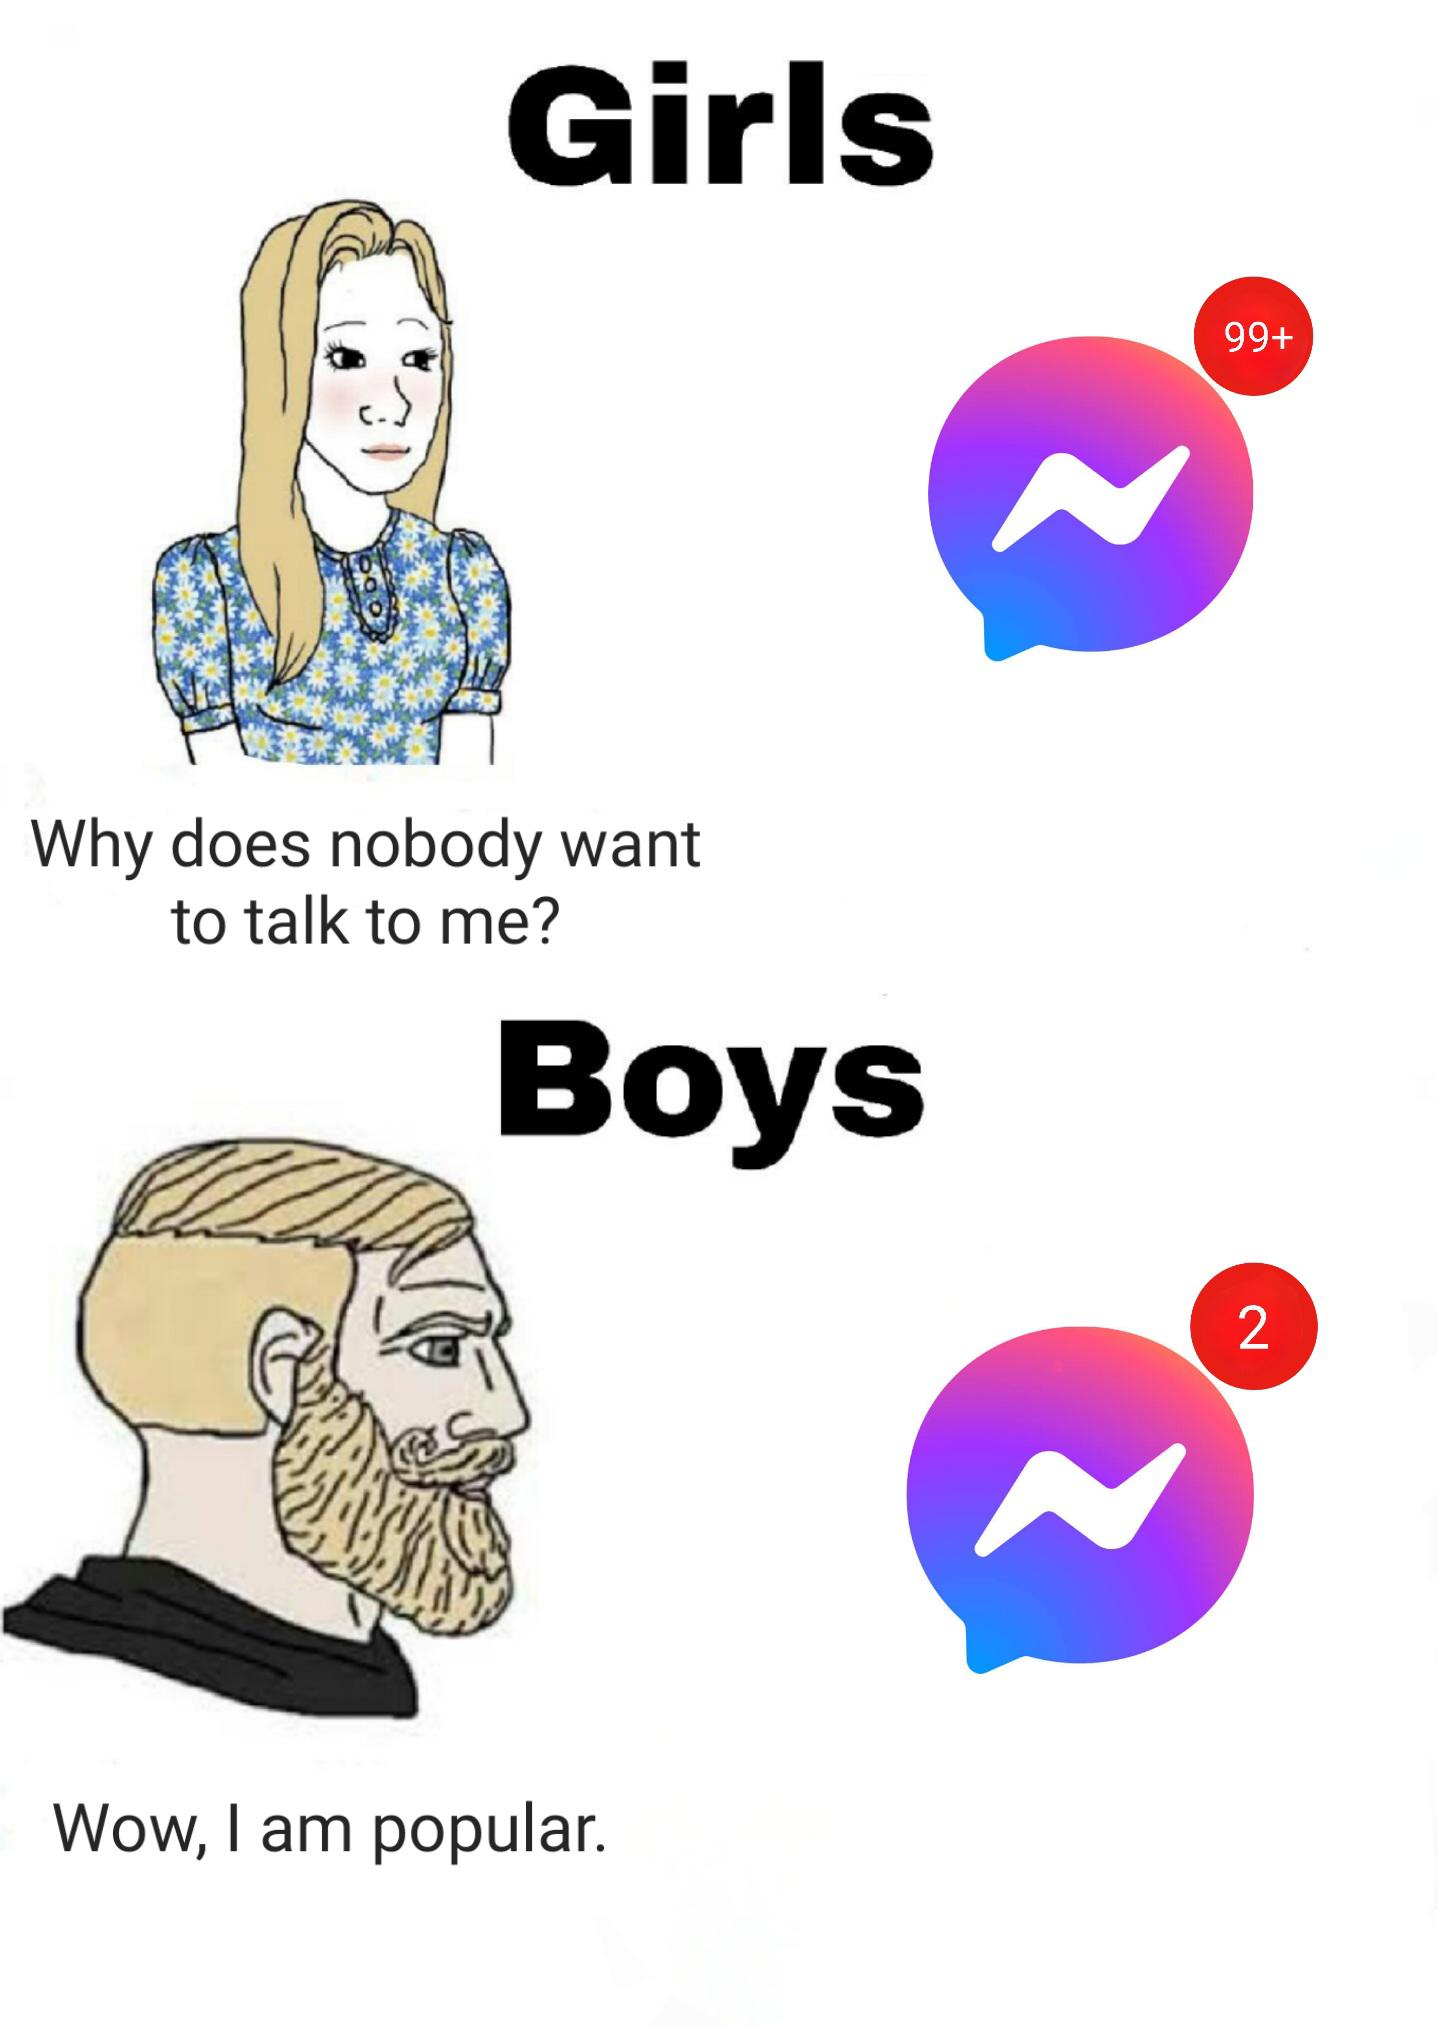 dank memes - girls vs boys meme - Girls Why does nobody want to talk to me? Boys Wow, I am popular. 99 2